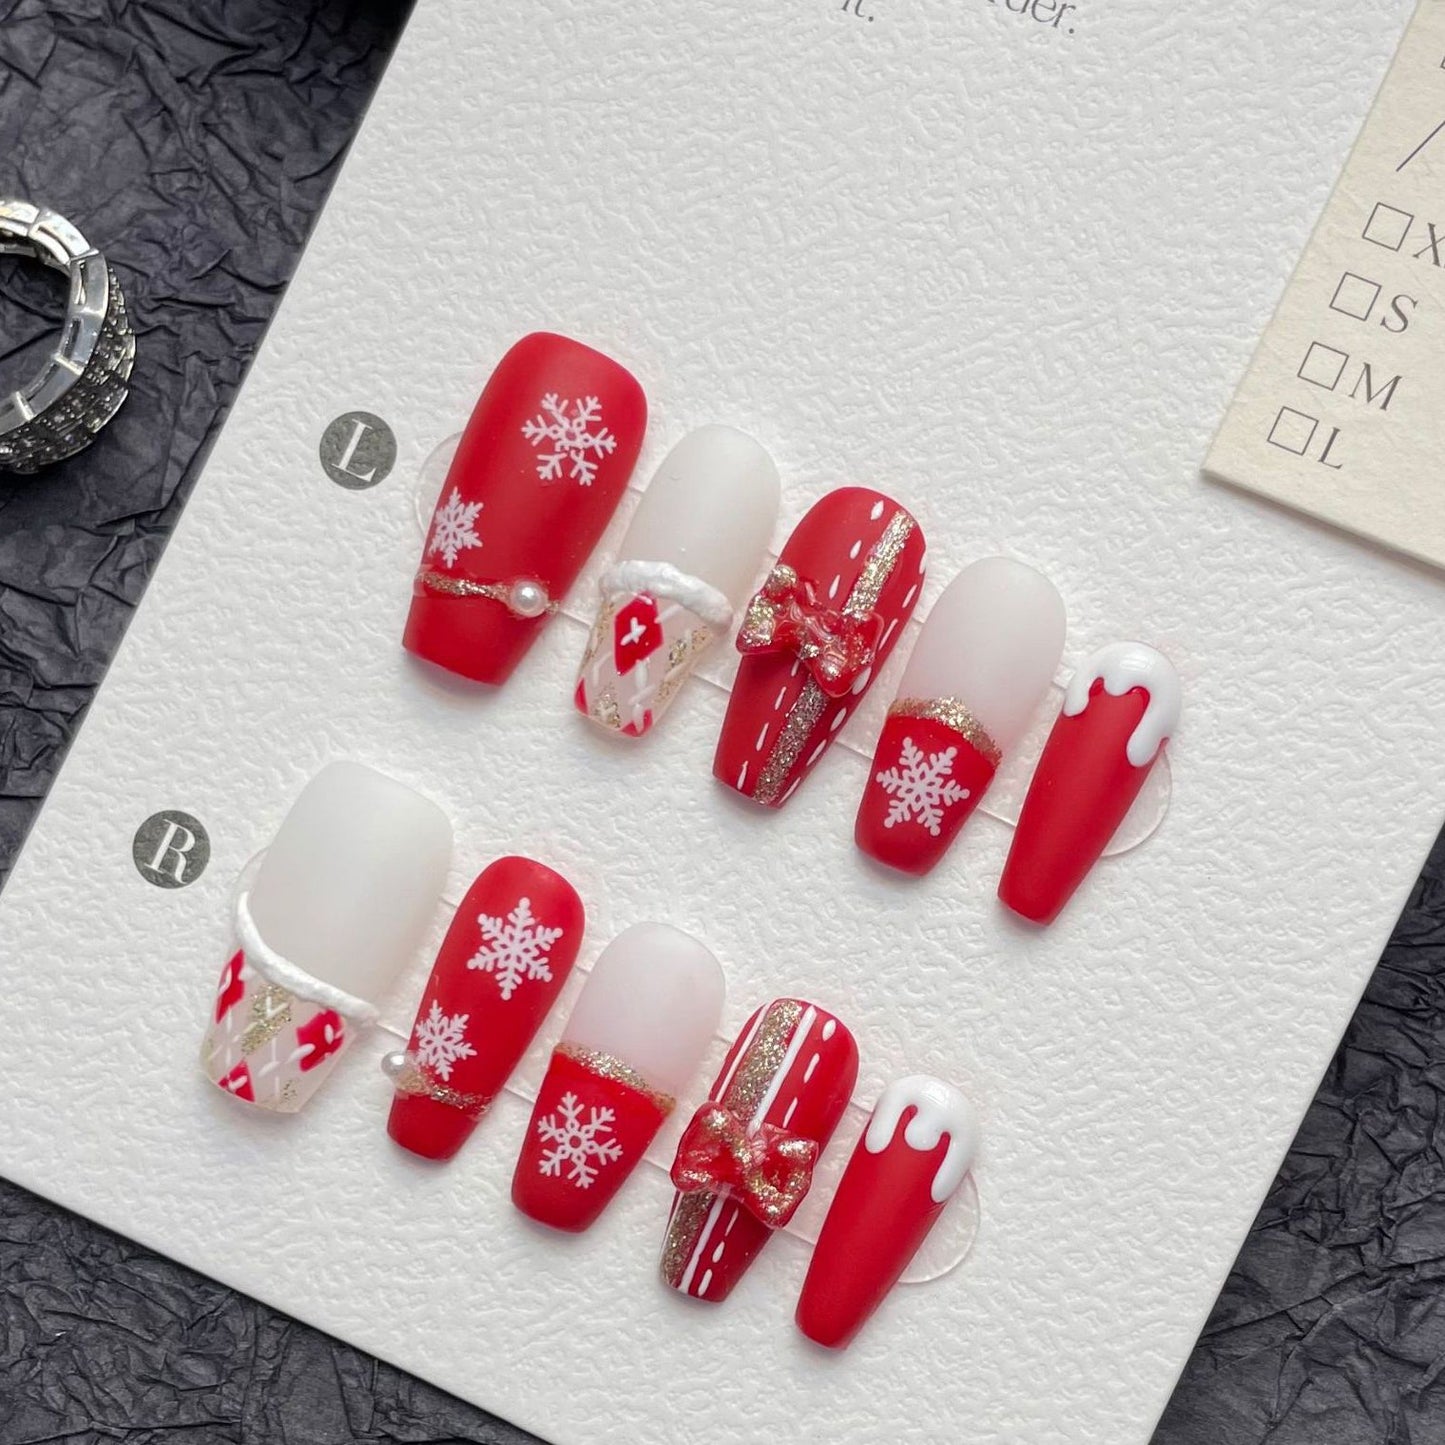 1272 Christmas snowflakes style press on nails 100% handmade false nails white red